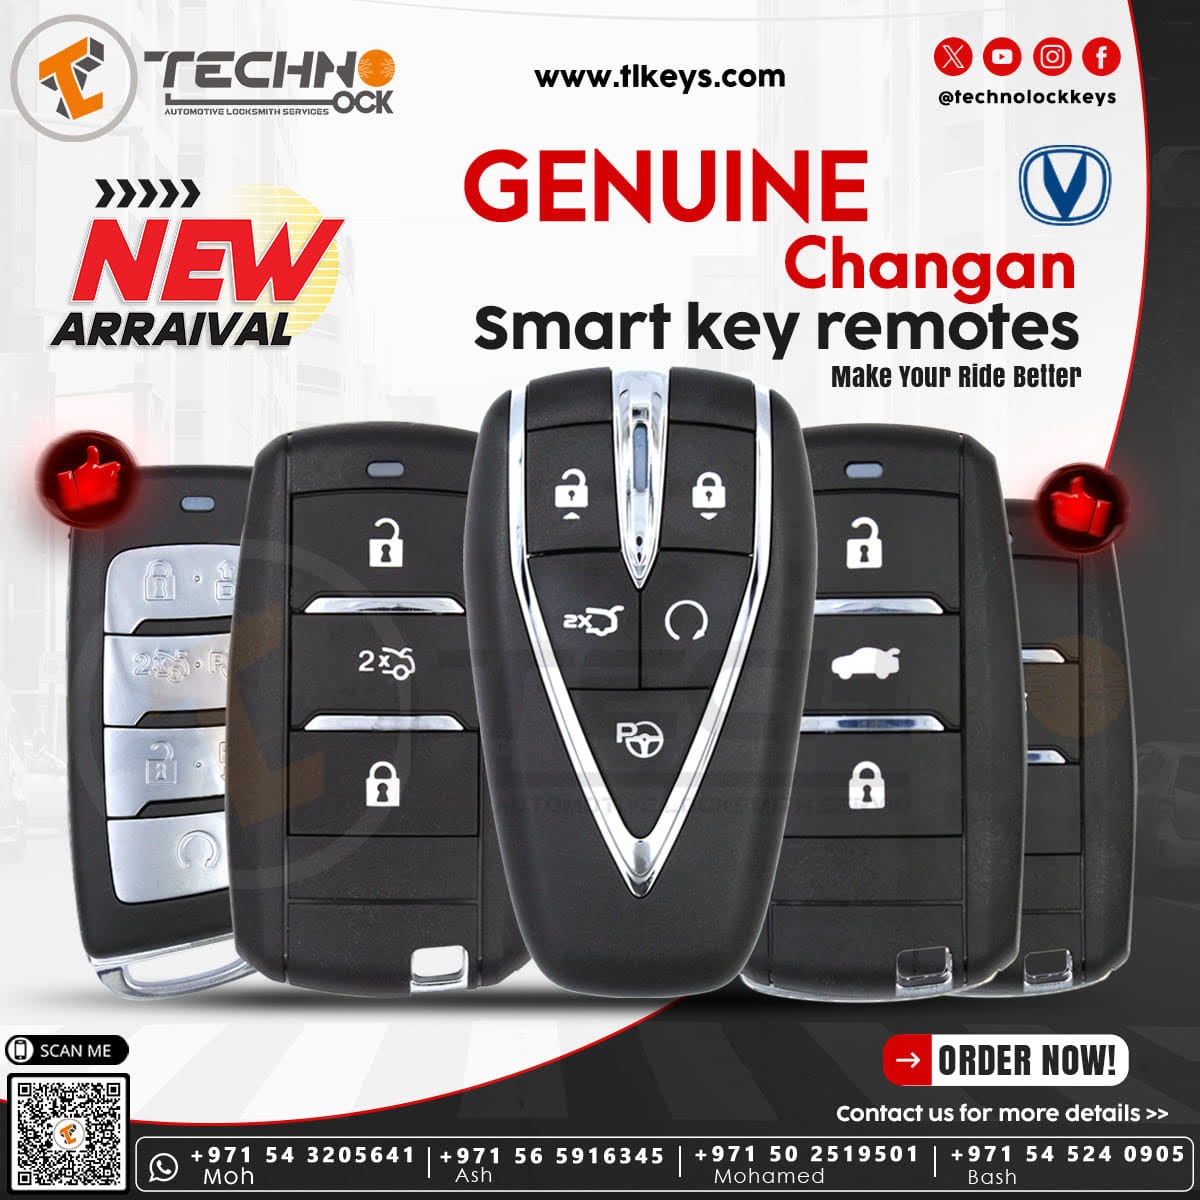 Genuine Changan Smart Key Remote Collection